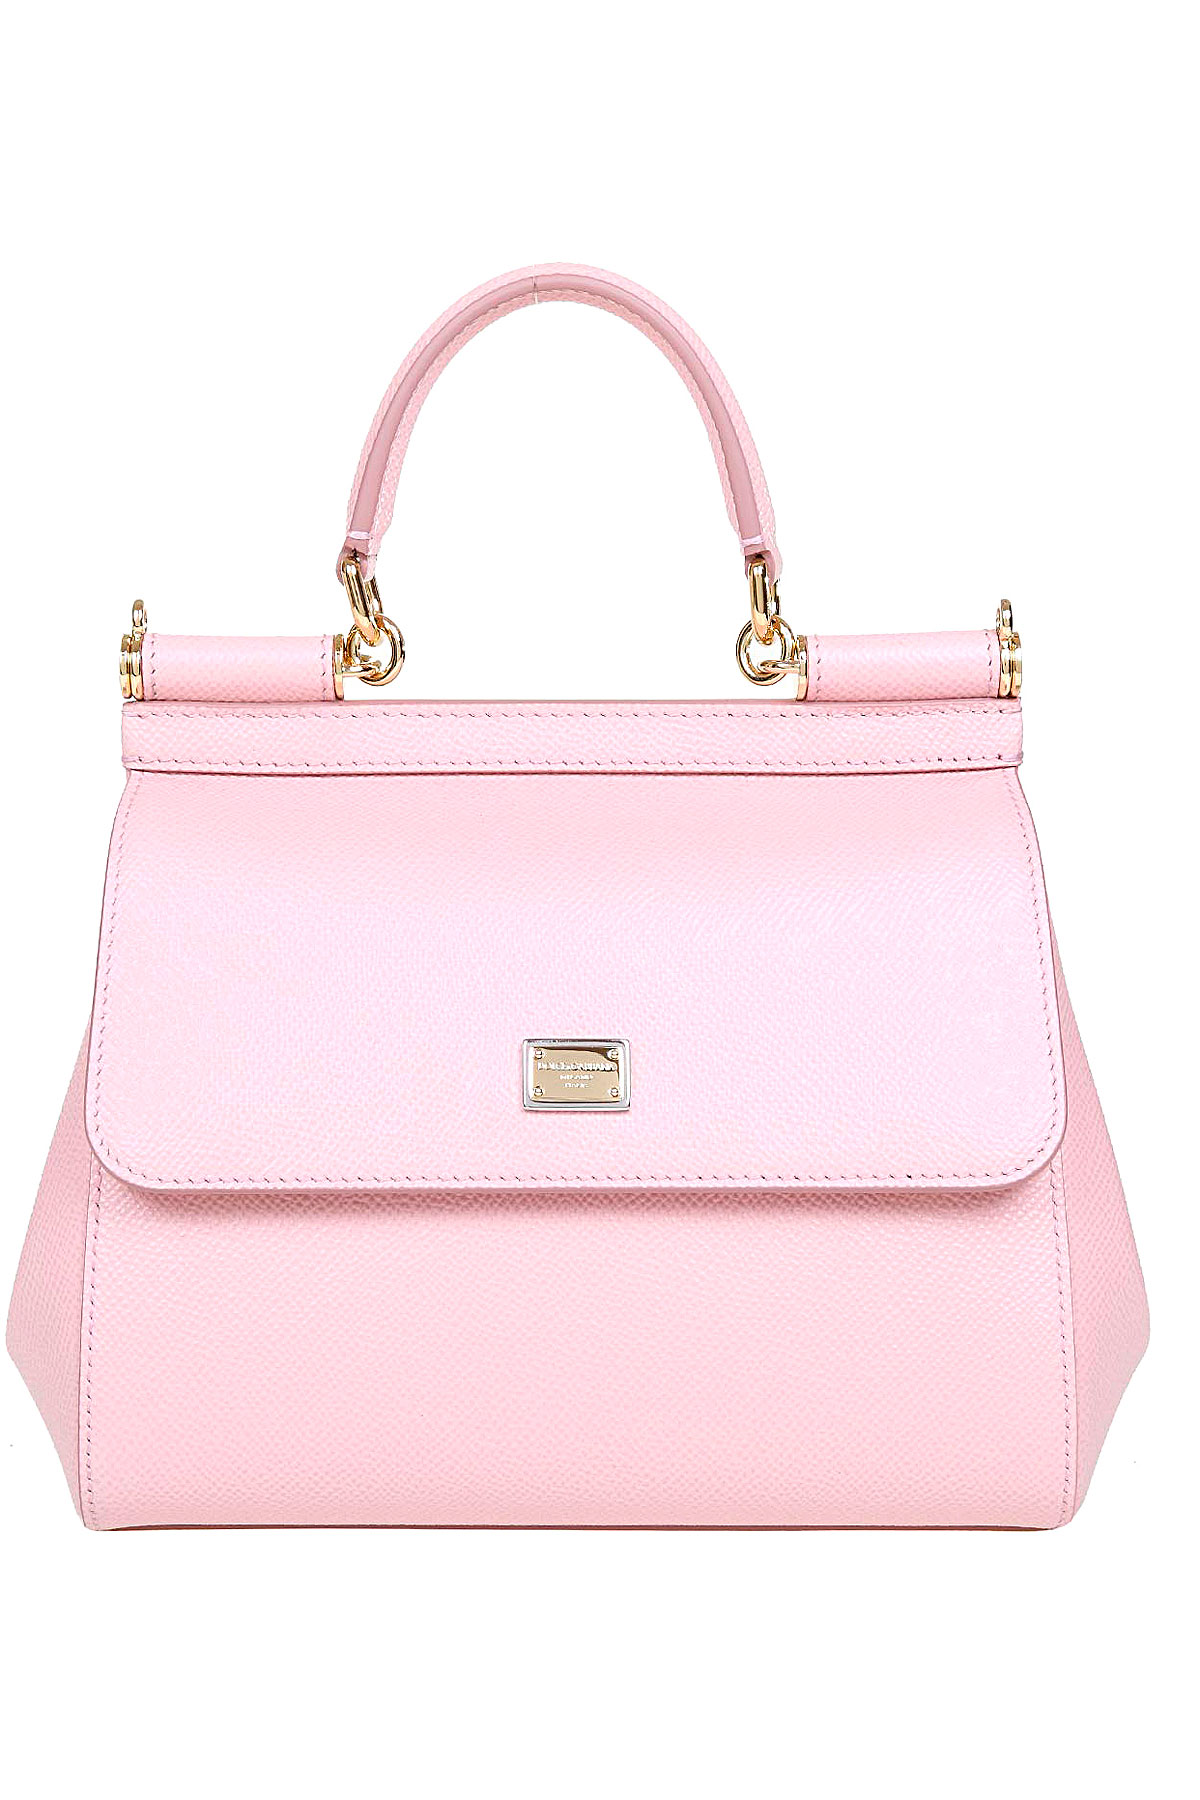 Handbags Dolce & Gabbana, Style code: bb6235-a1001-8h422